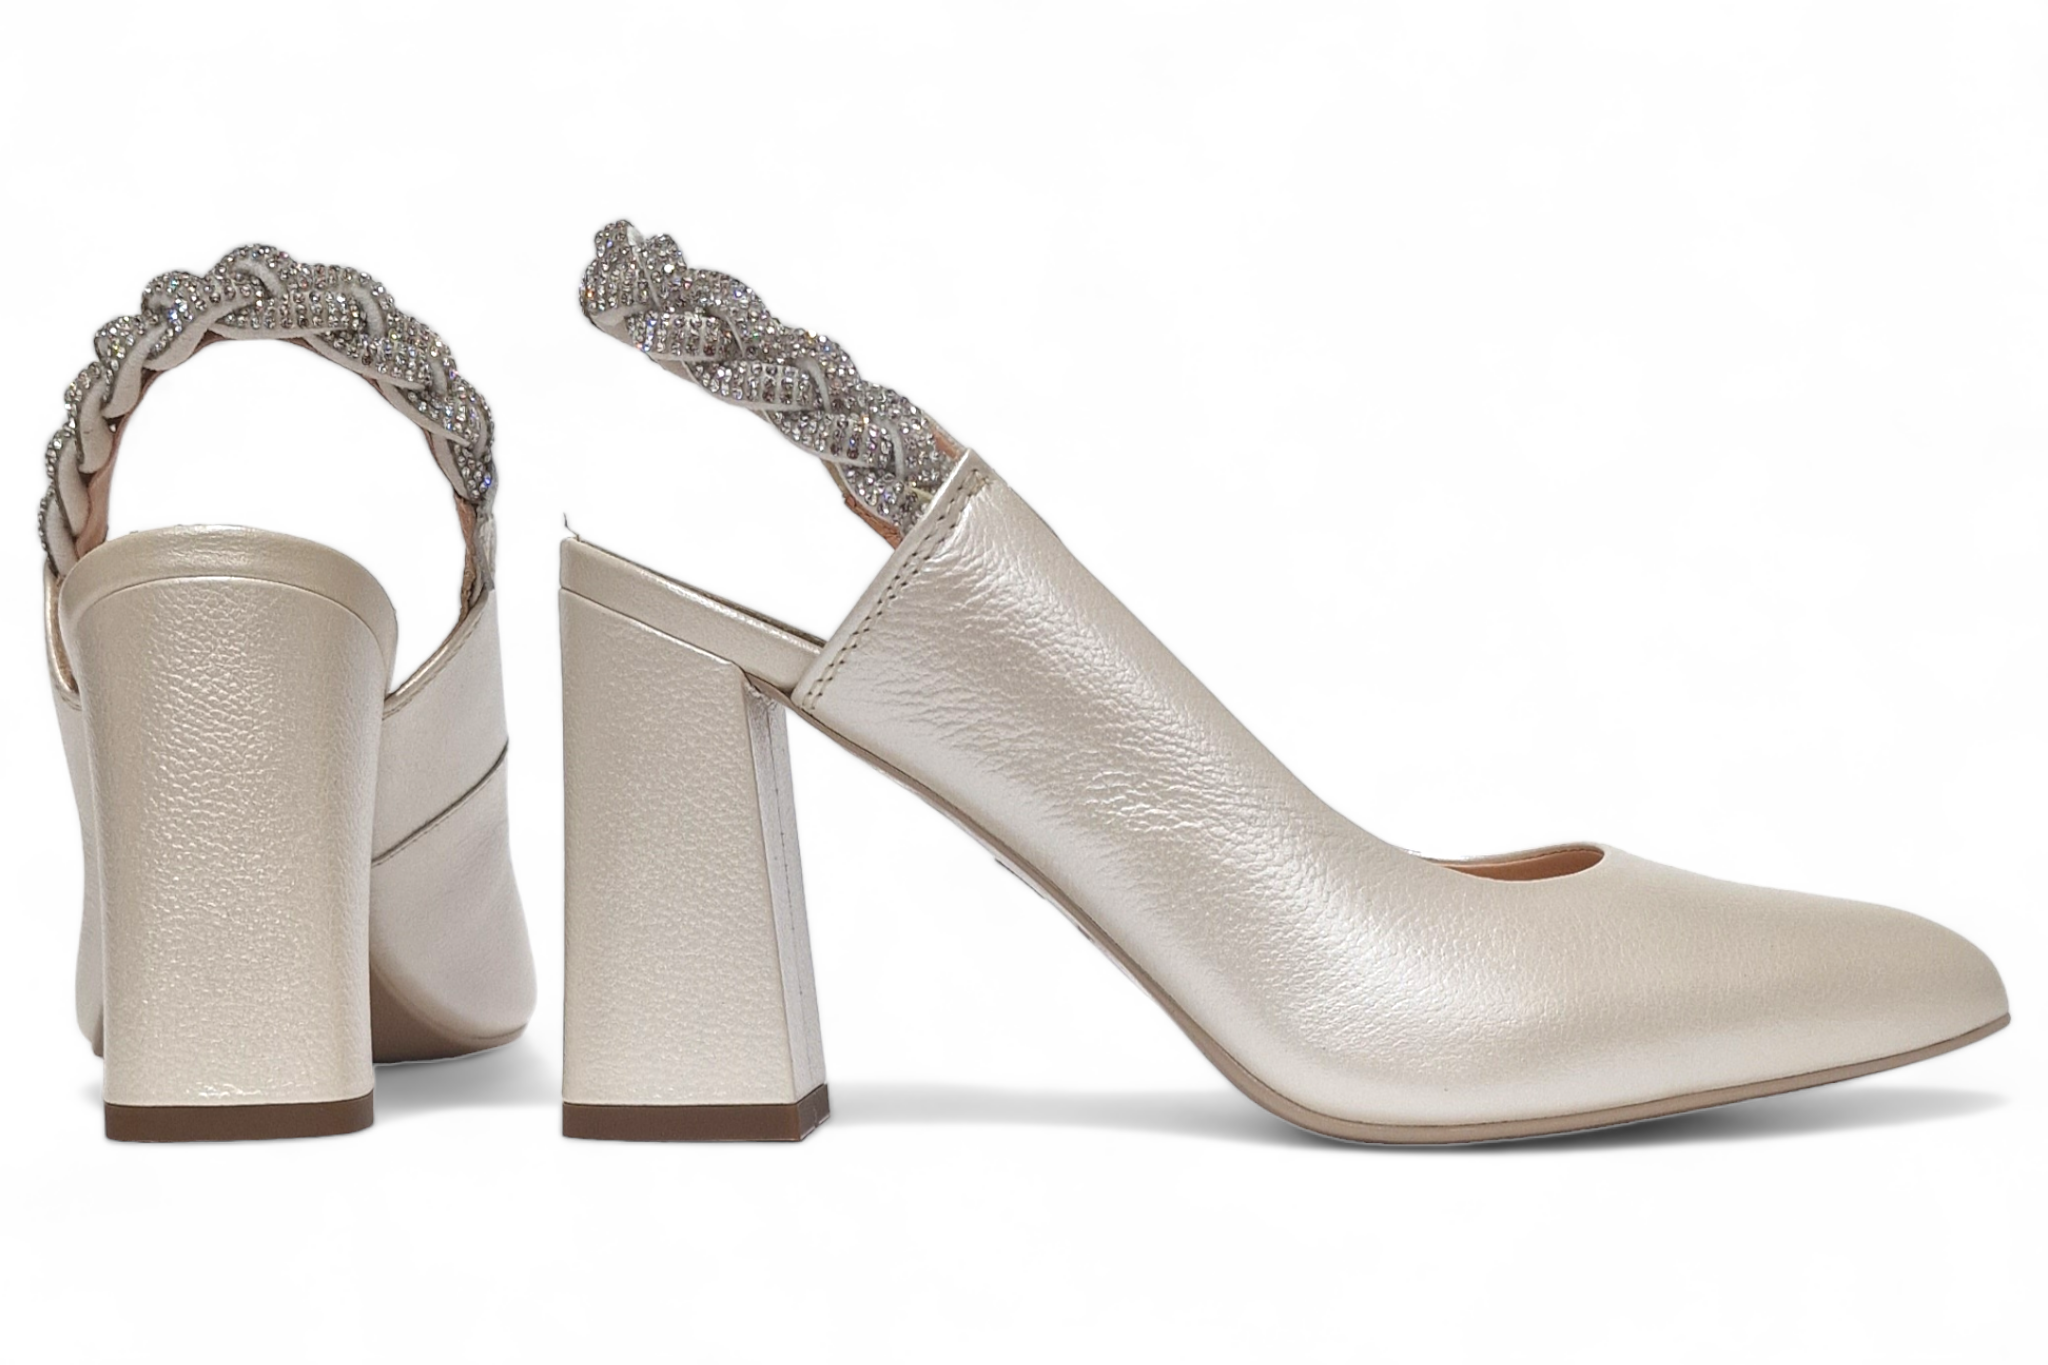 Pantofi dama eleganti piele naturala SALA dec 9954 ivory